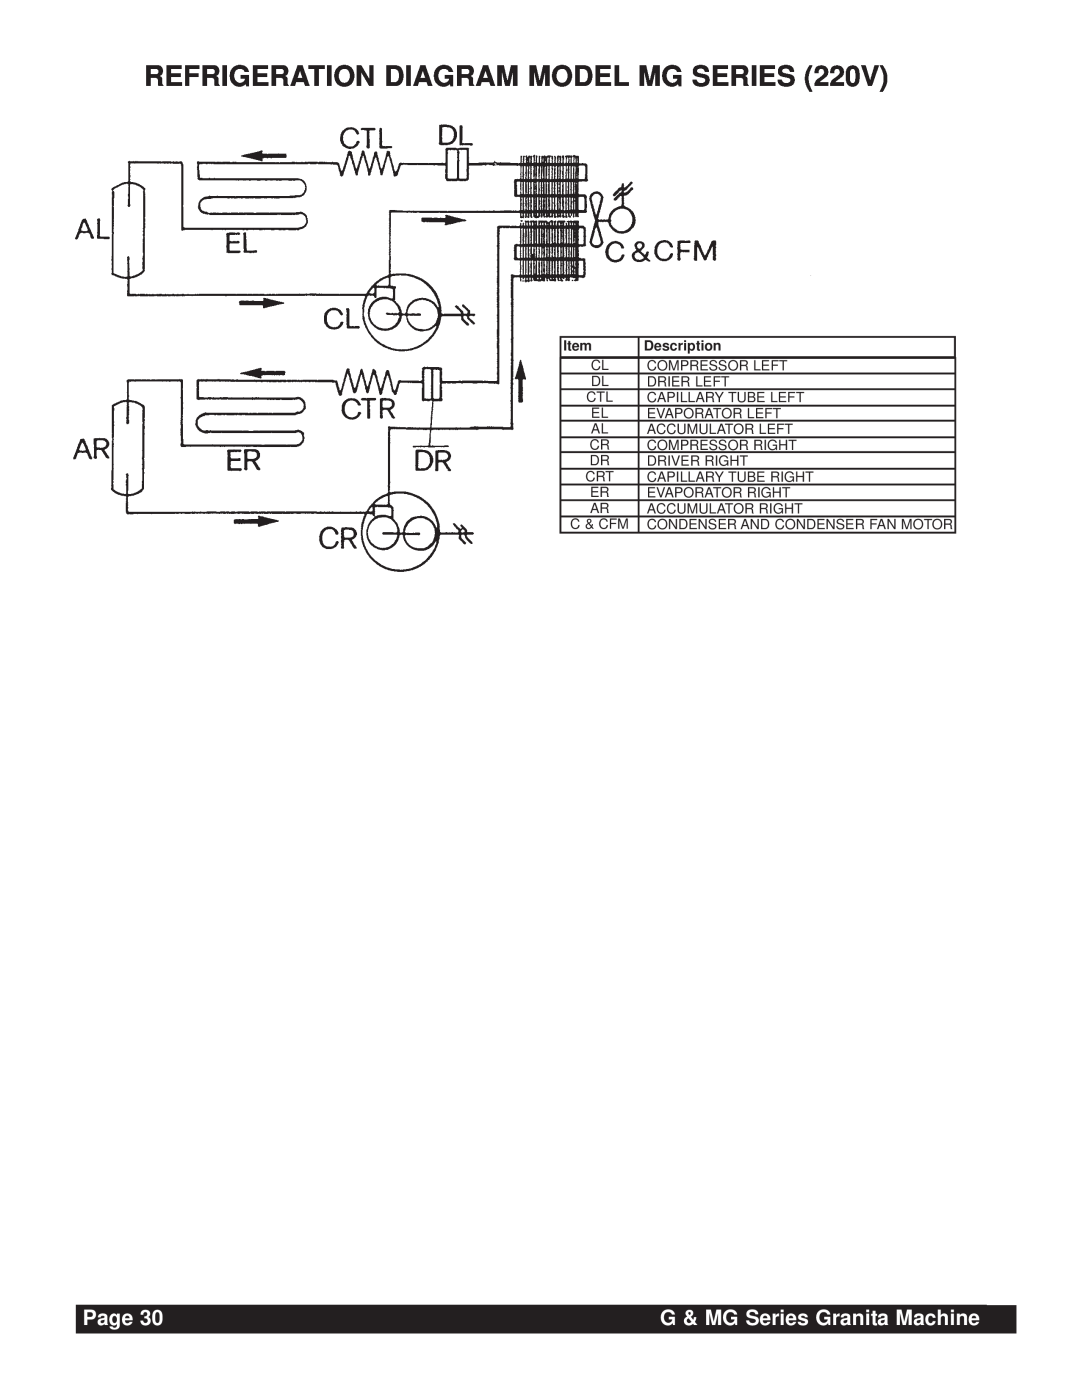 Grindmaster instruction manual Refrigeration Diagram Model Mg Series, Page, G & MG Series Granita Machine, Description 